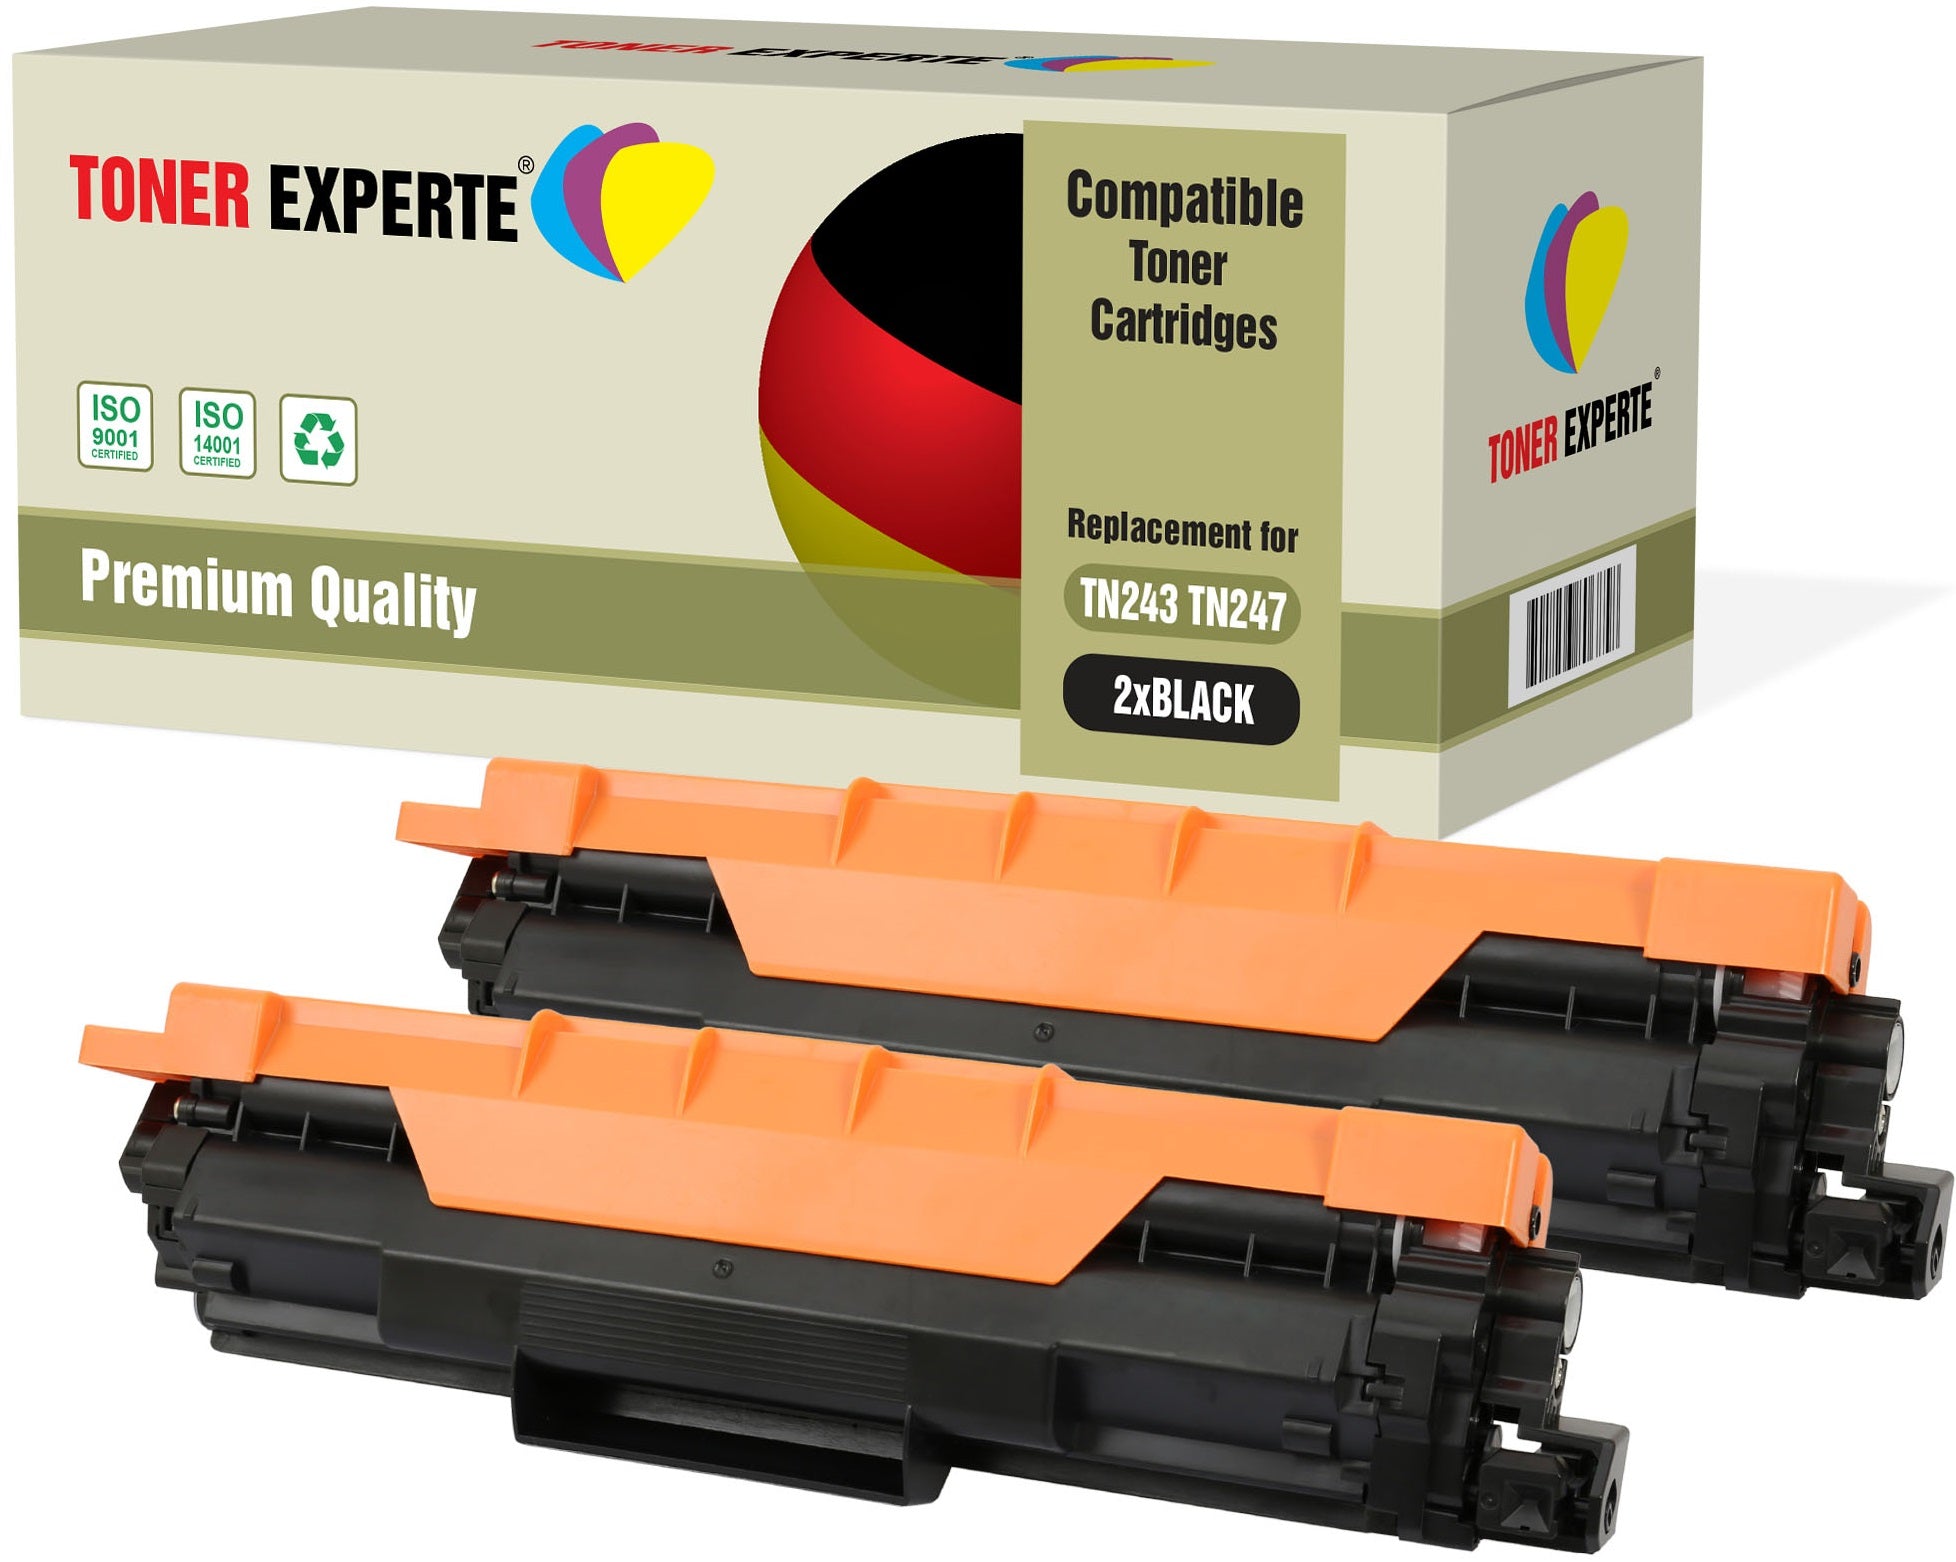 Compatible TN243 TN247 4 Toner Cartridges for Brother - Toner cartridges -  by Toner Experte